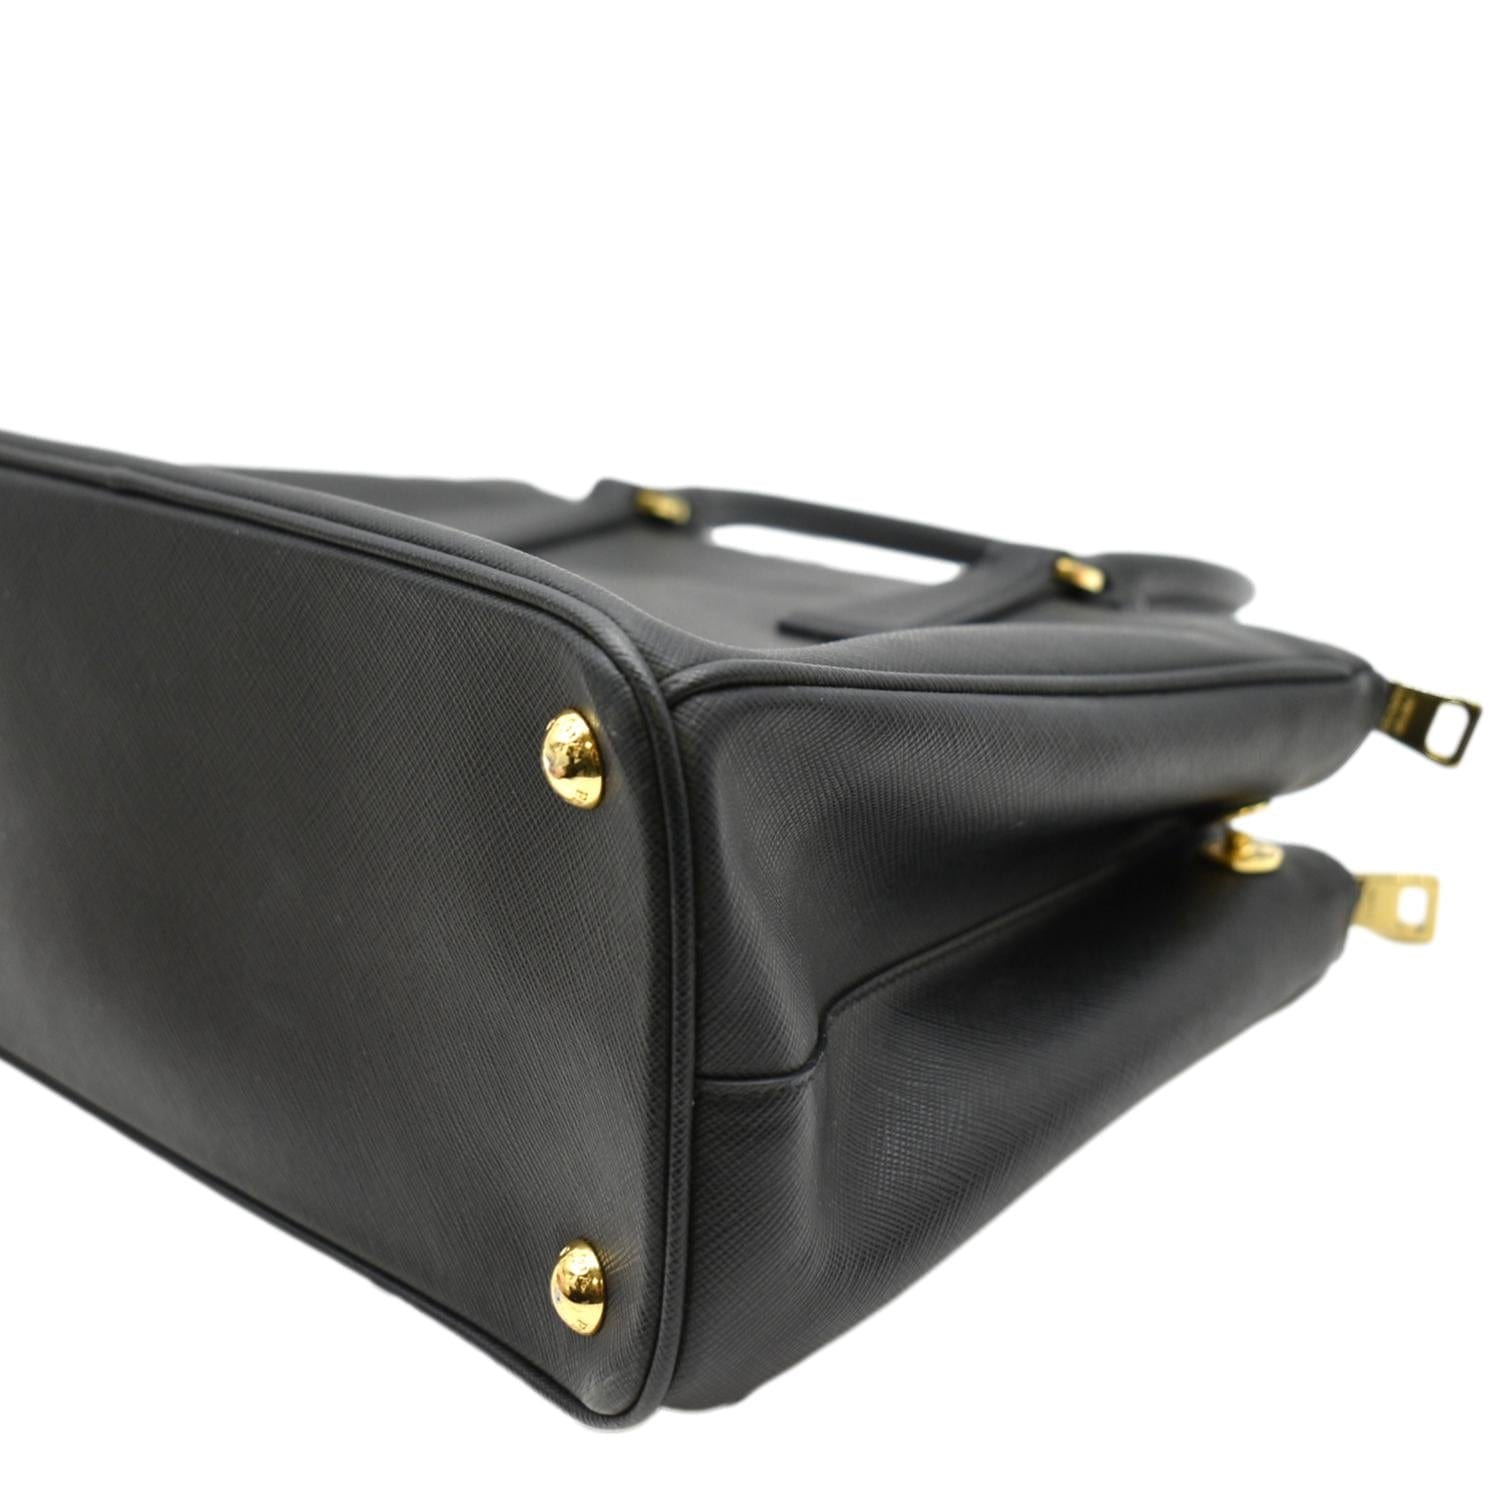 Prada Galleria Saffiano Leather Double Zip Bag, * Small *, Black Authentic